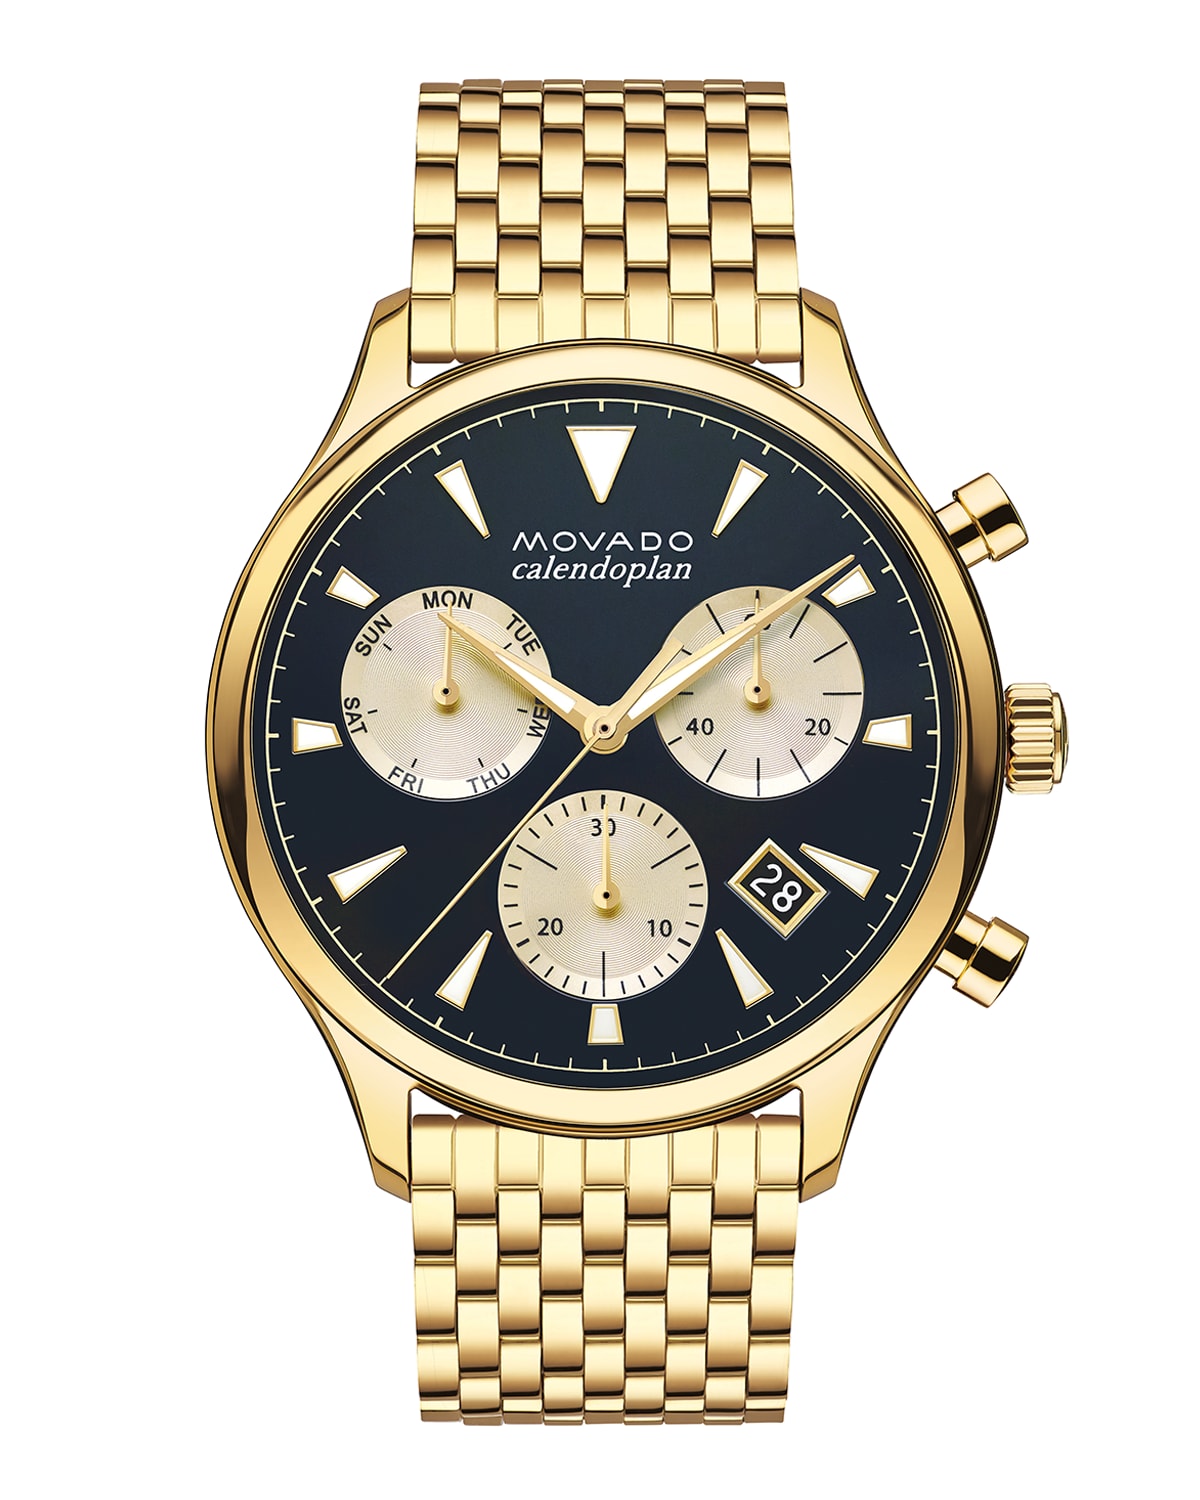 Movado Men's Heritage Series Calendoplan Bracelet Watch, Gold